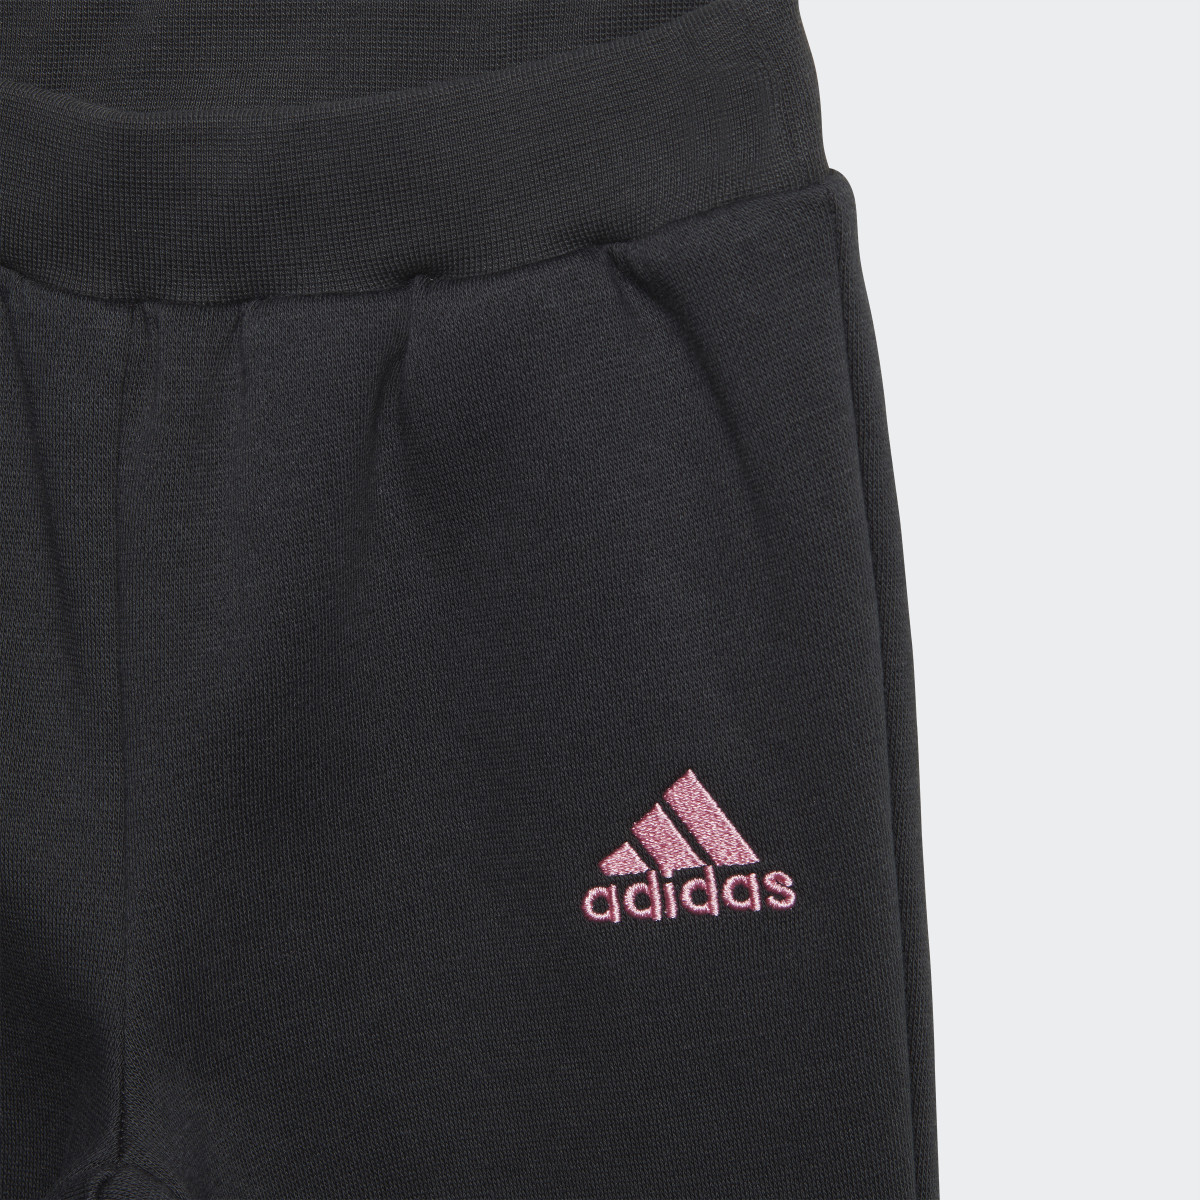 Adidas Completo Brand Love Crew Sweatshirt Infant. 9